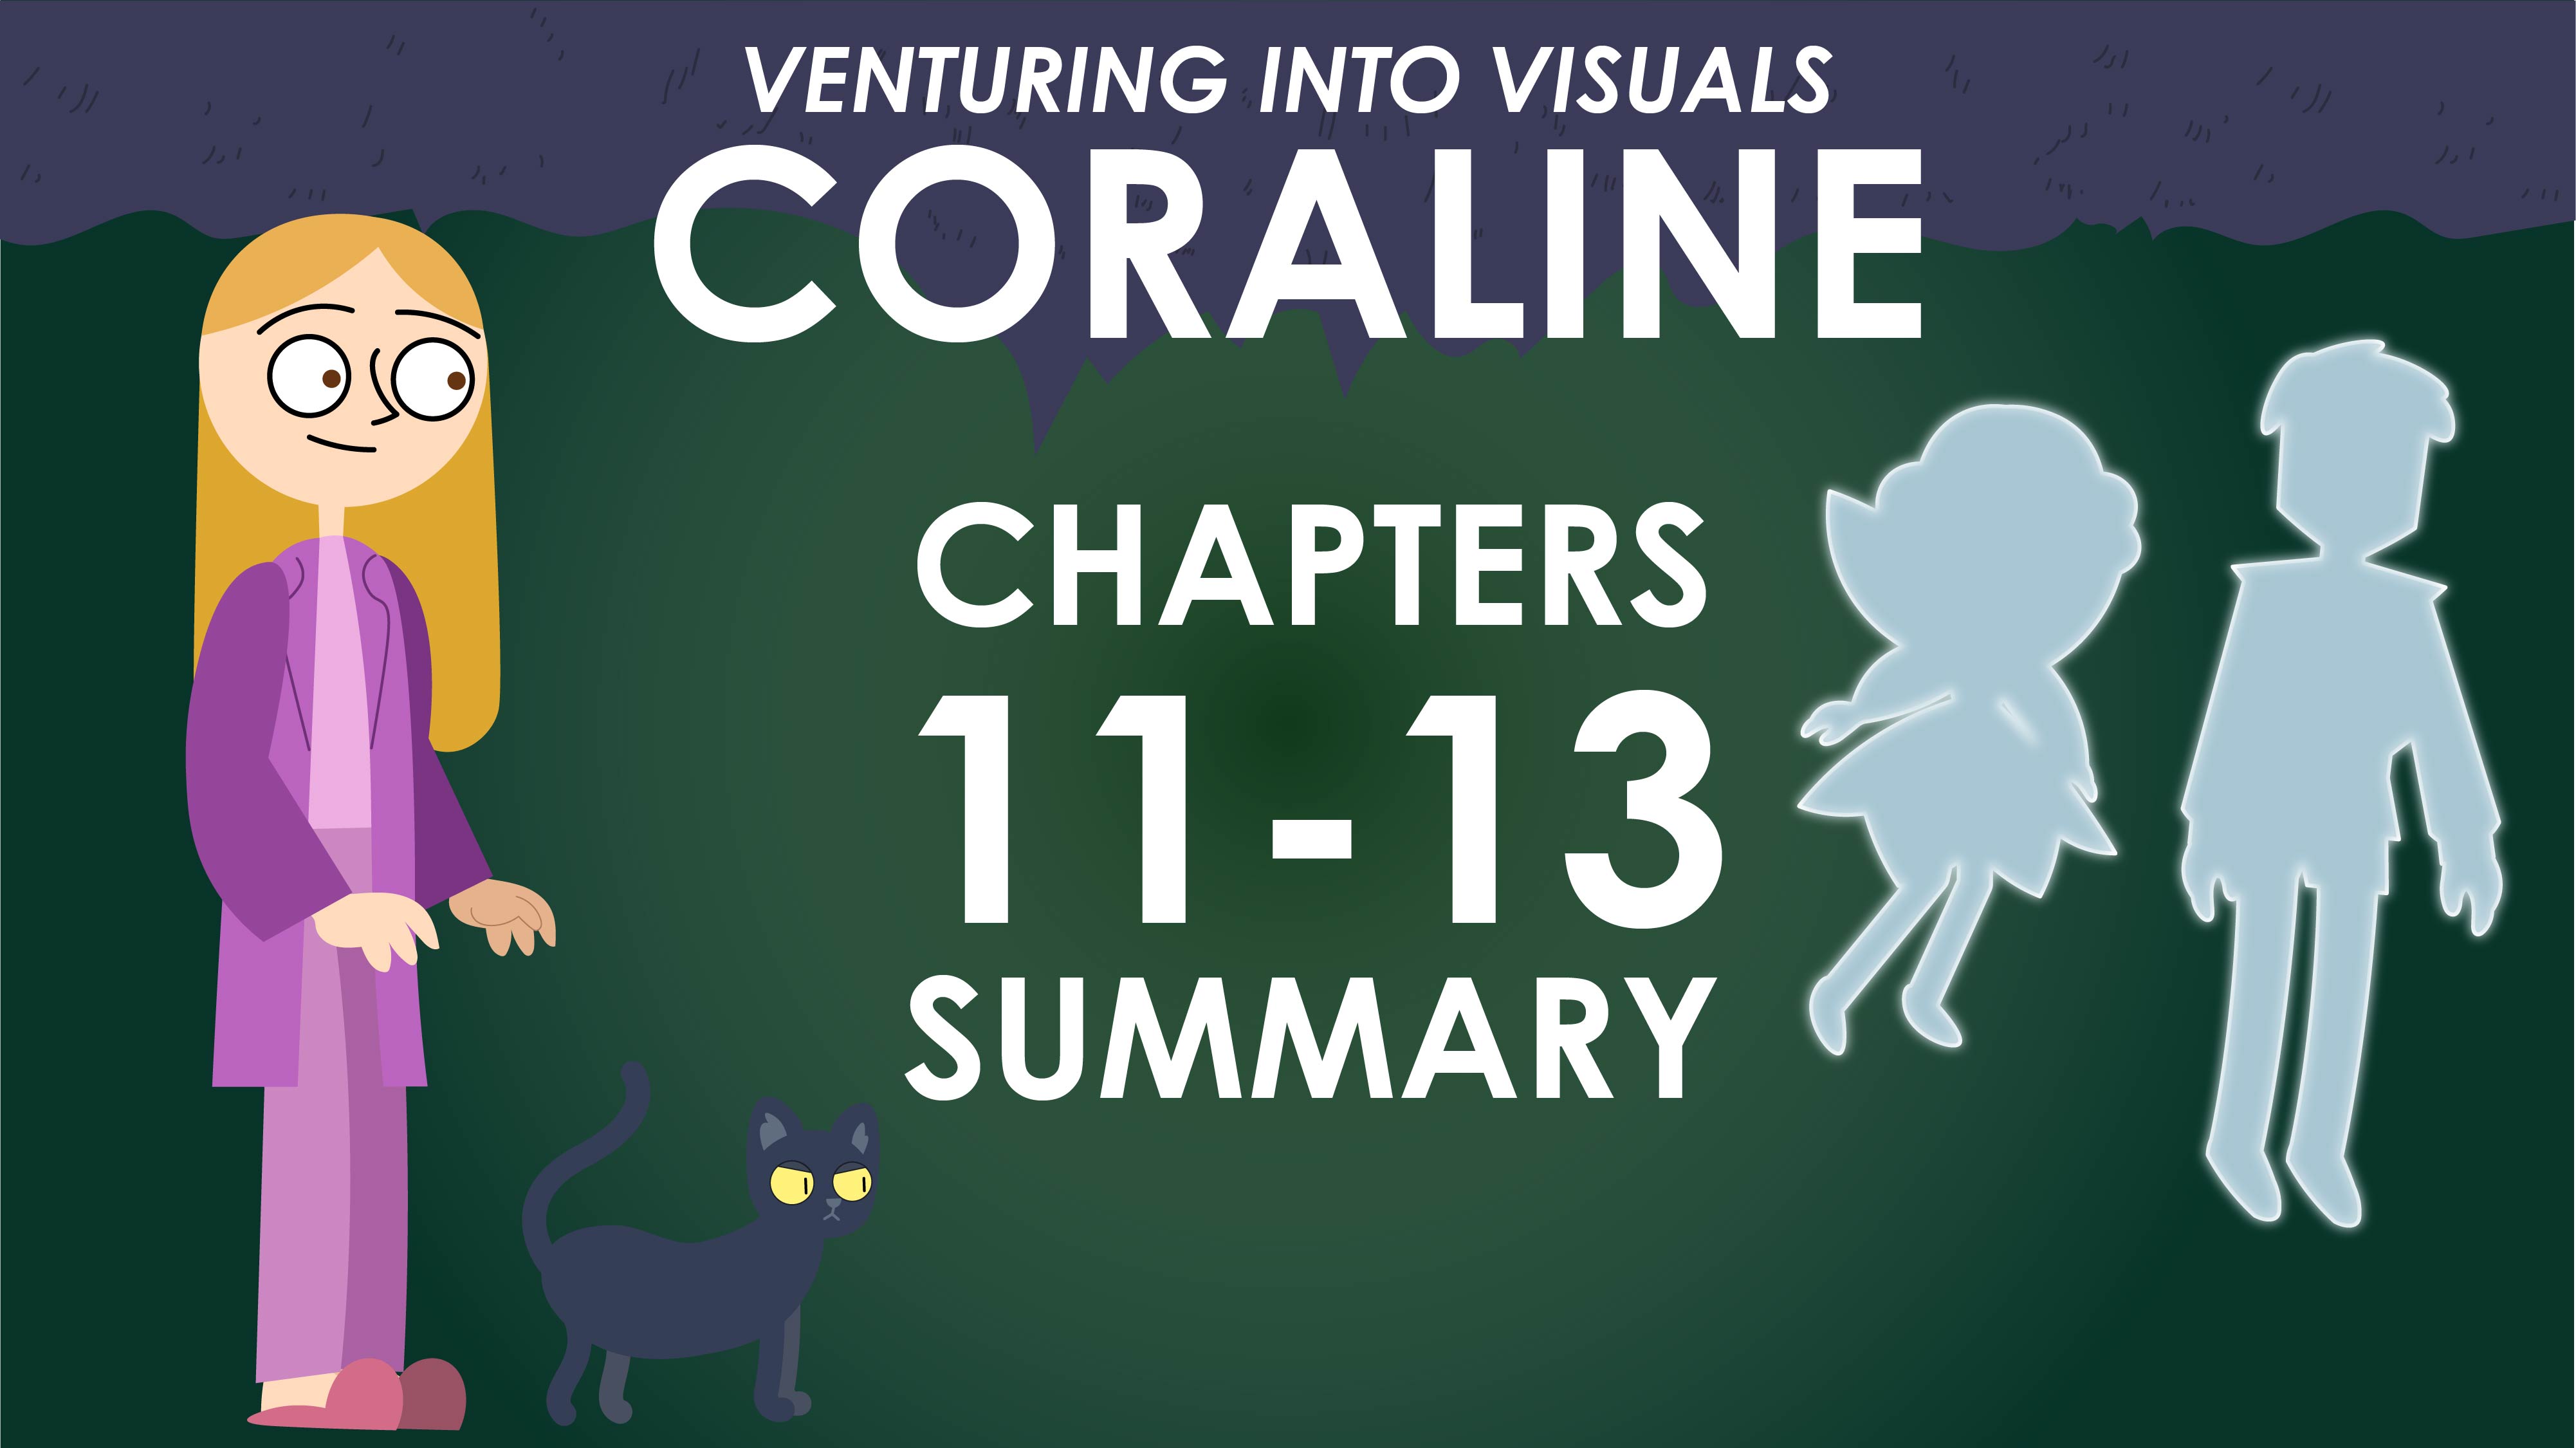 Coraline - Neil Gaiman - Chapters 11-13 - Venturing Into Visuals Series